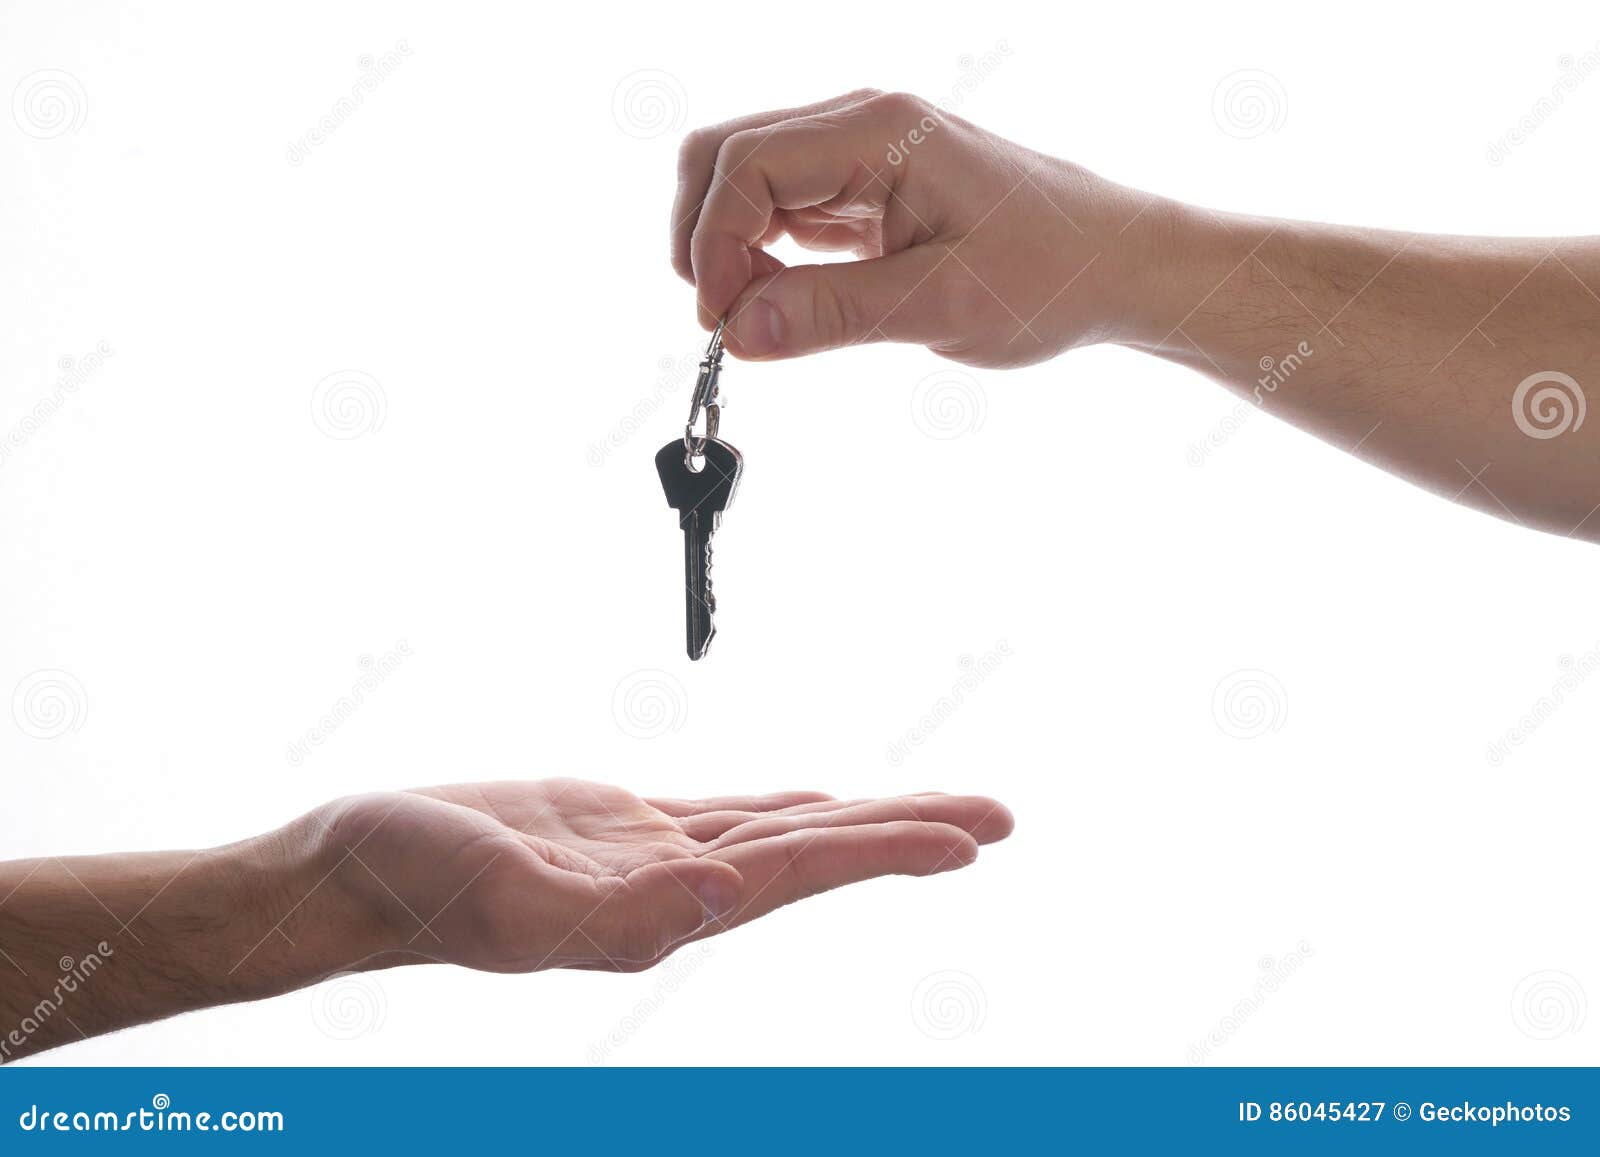 Мужчина дает ключи. Ключ на ладони. Передача ключей белый фон. Человек держит в ладони ключи. Женская рука с ключами в квартире.